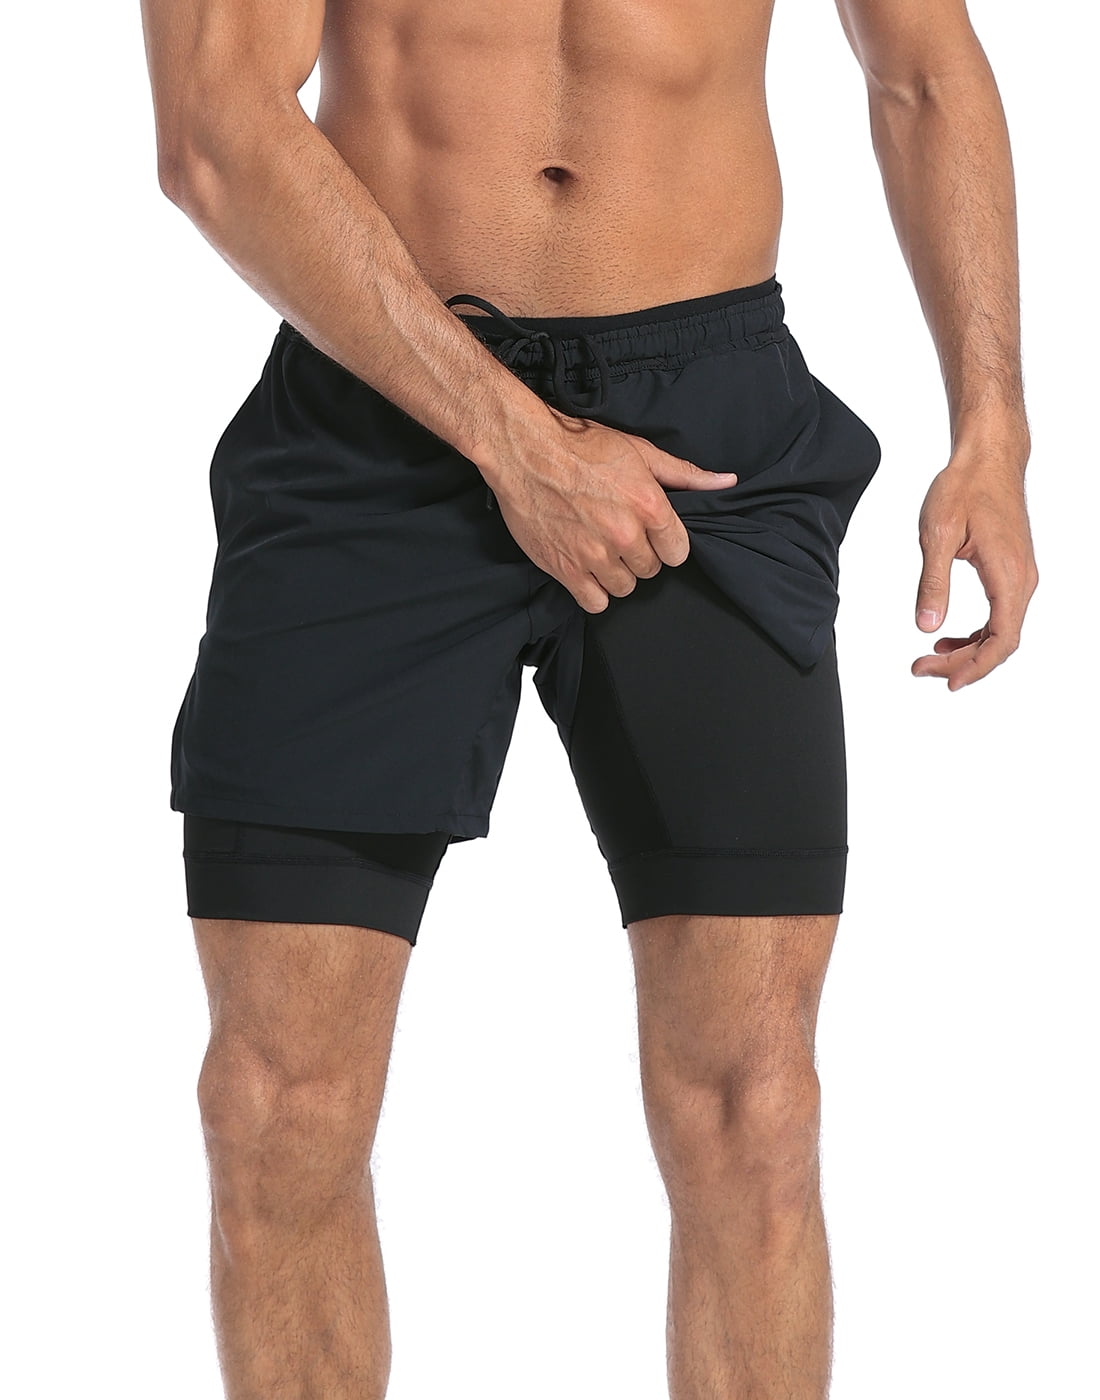 LRD Men's Workout Shorts with Compression Liner 5 Inch Inseam Black / Black  M